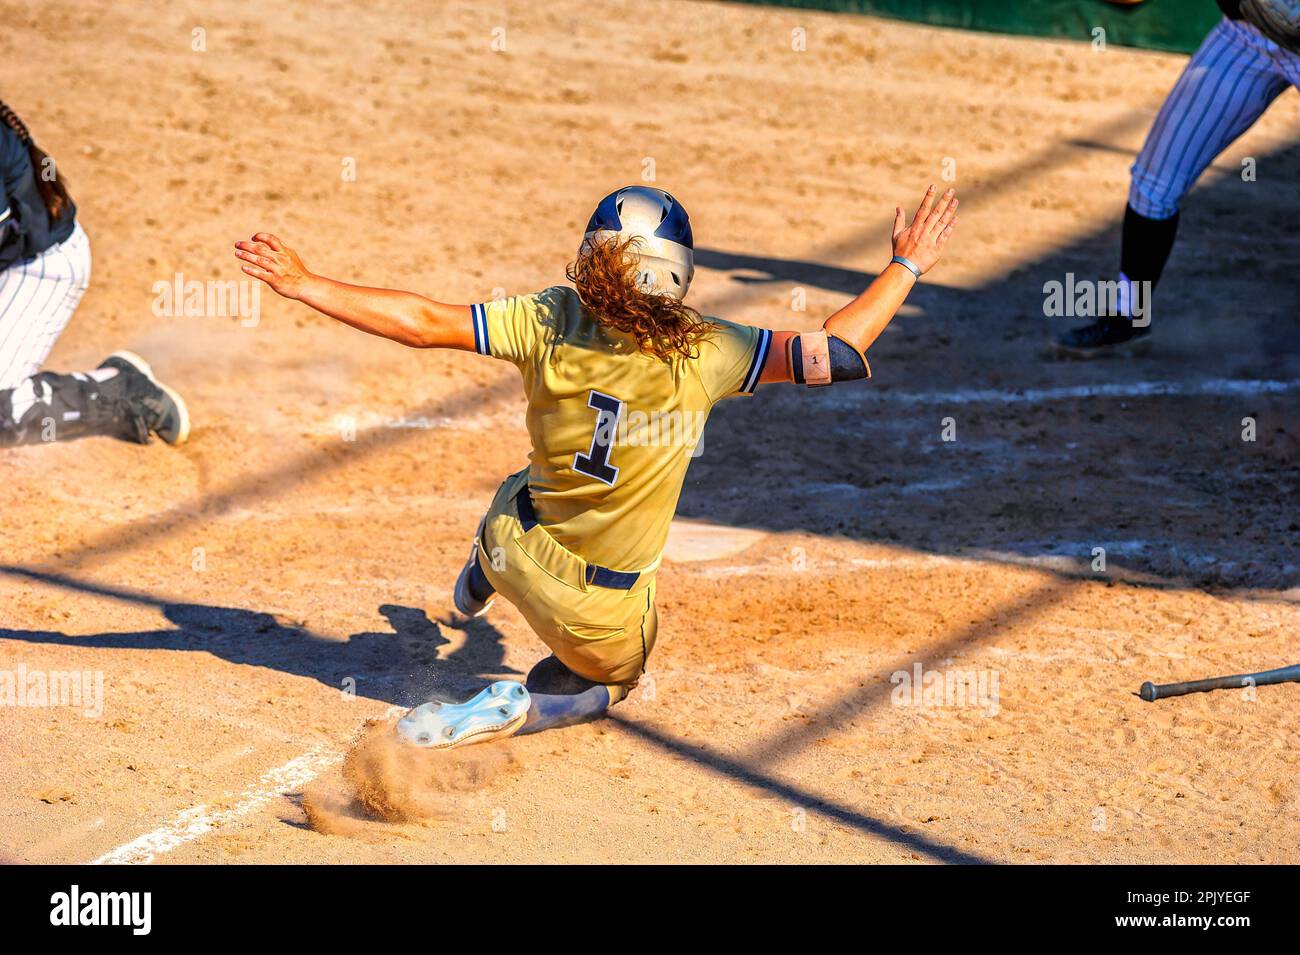 A Baseball Softball Player Is Sliding Into Home Plate Stock Photo